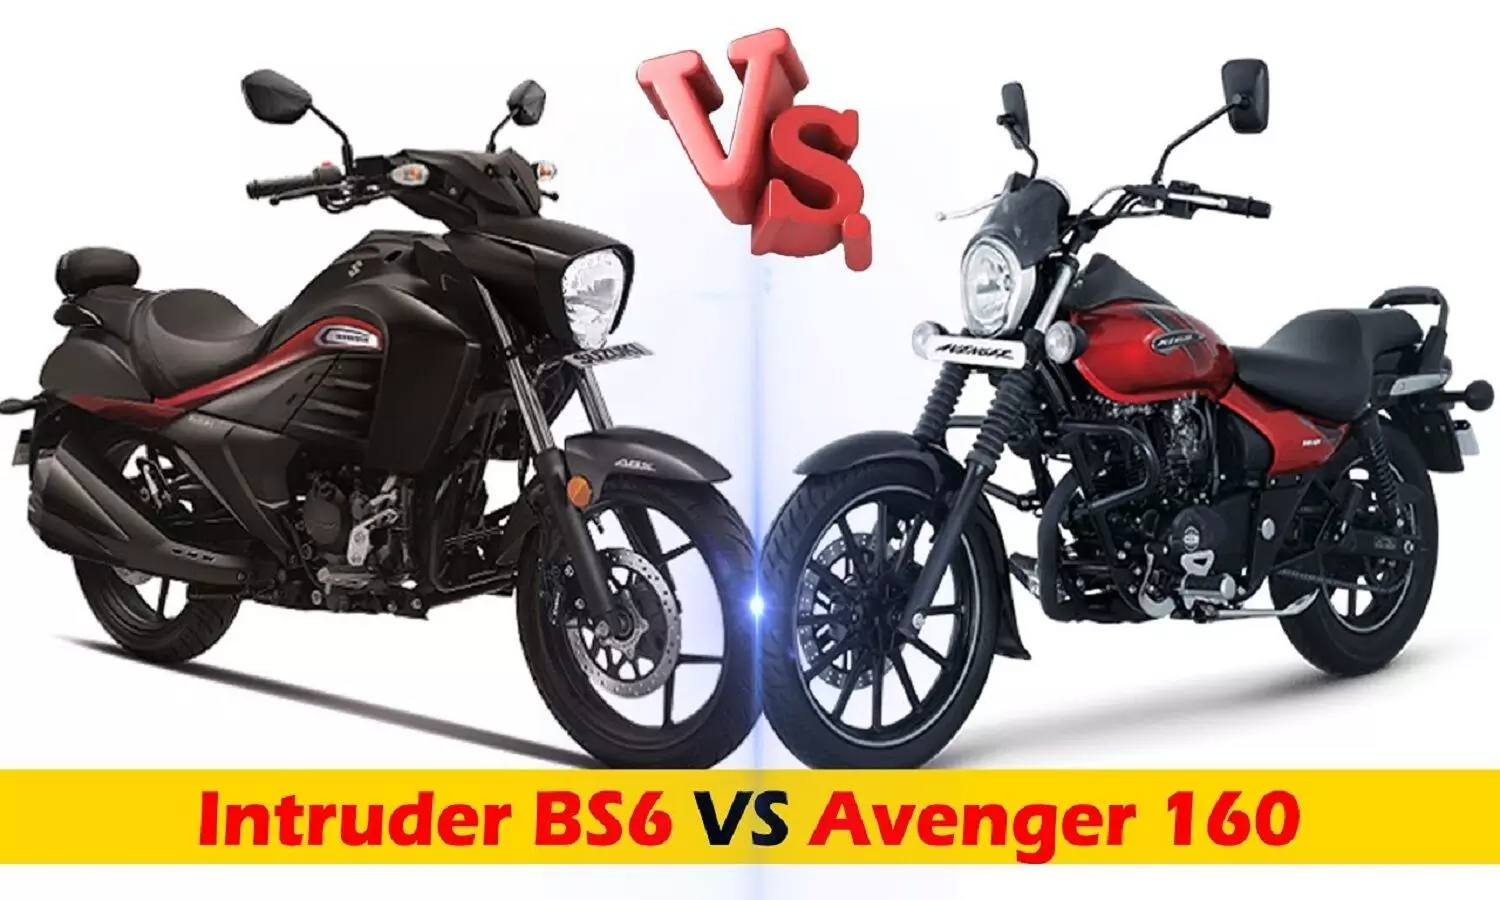 Avenger 160 Vs Intruder 150 In Hindi: कौन सी बाइक है बेस्ट